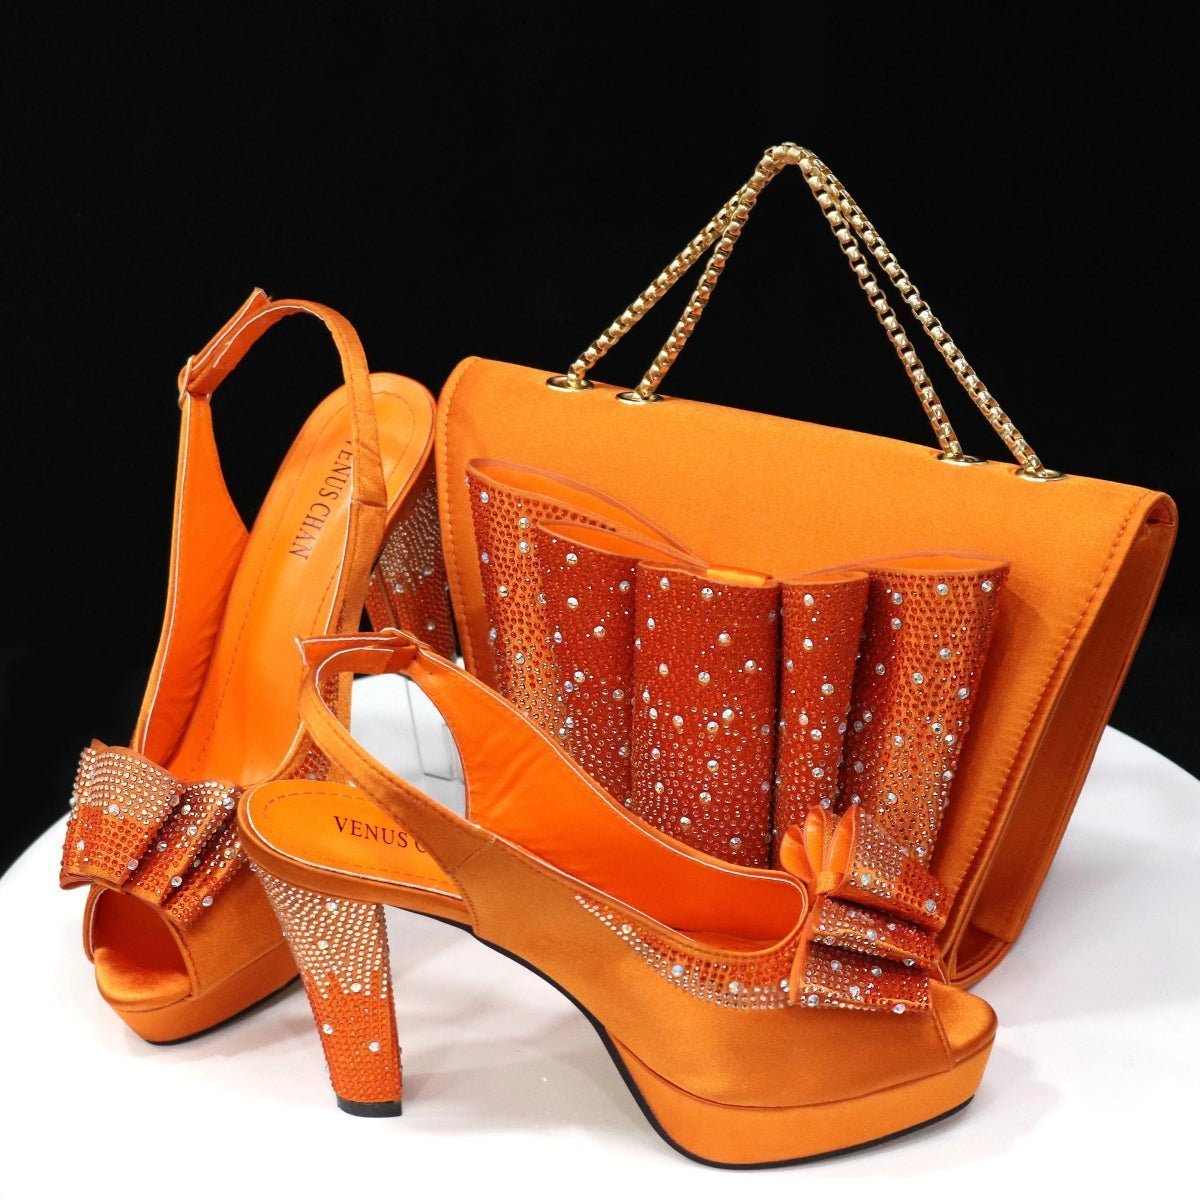 Style Harmony: Italian Shoes & Bag Set for Weddings, Parties - Orange - Women - Shoes - Milvertons